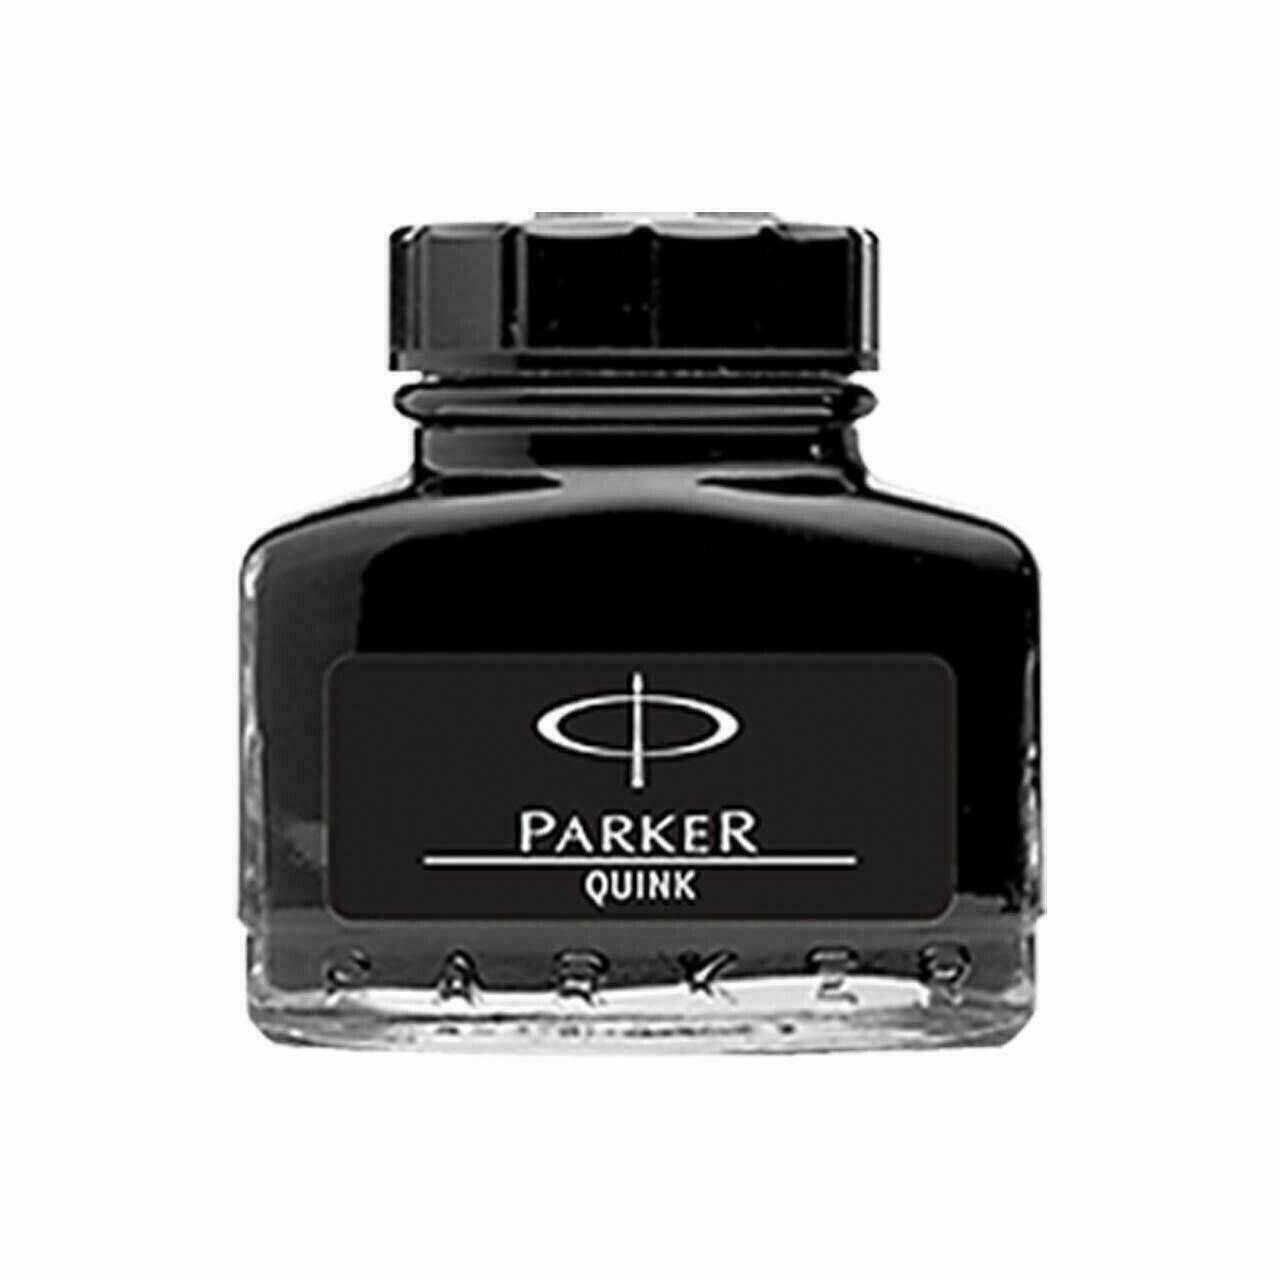 Original Parker Quink Ink Bottle Black Color For Fountain Pen 30ml|FREE SHIPPING